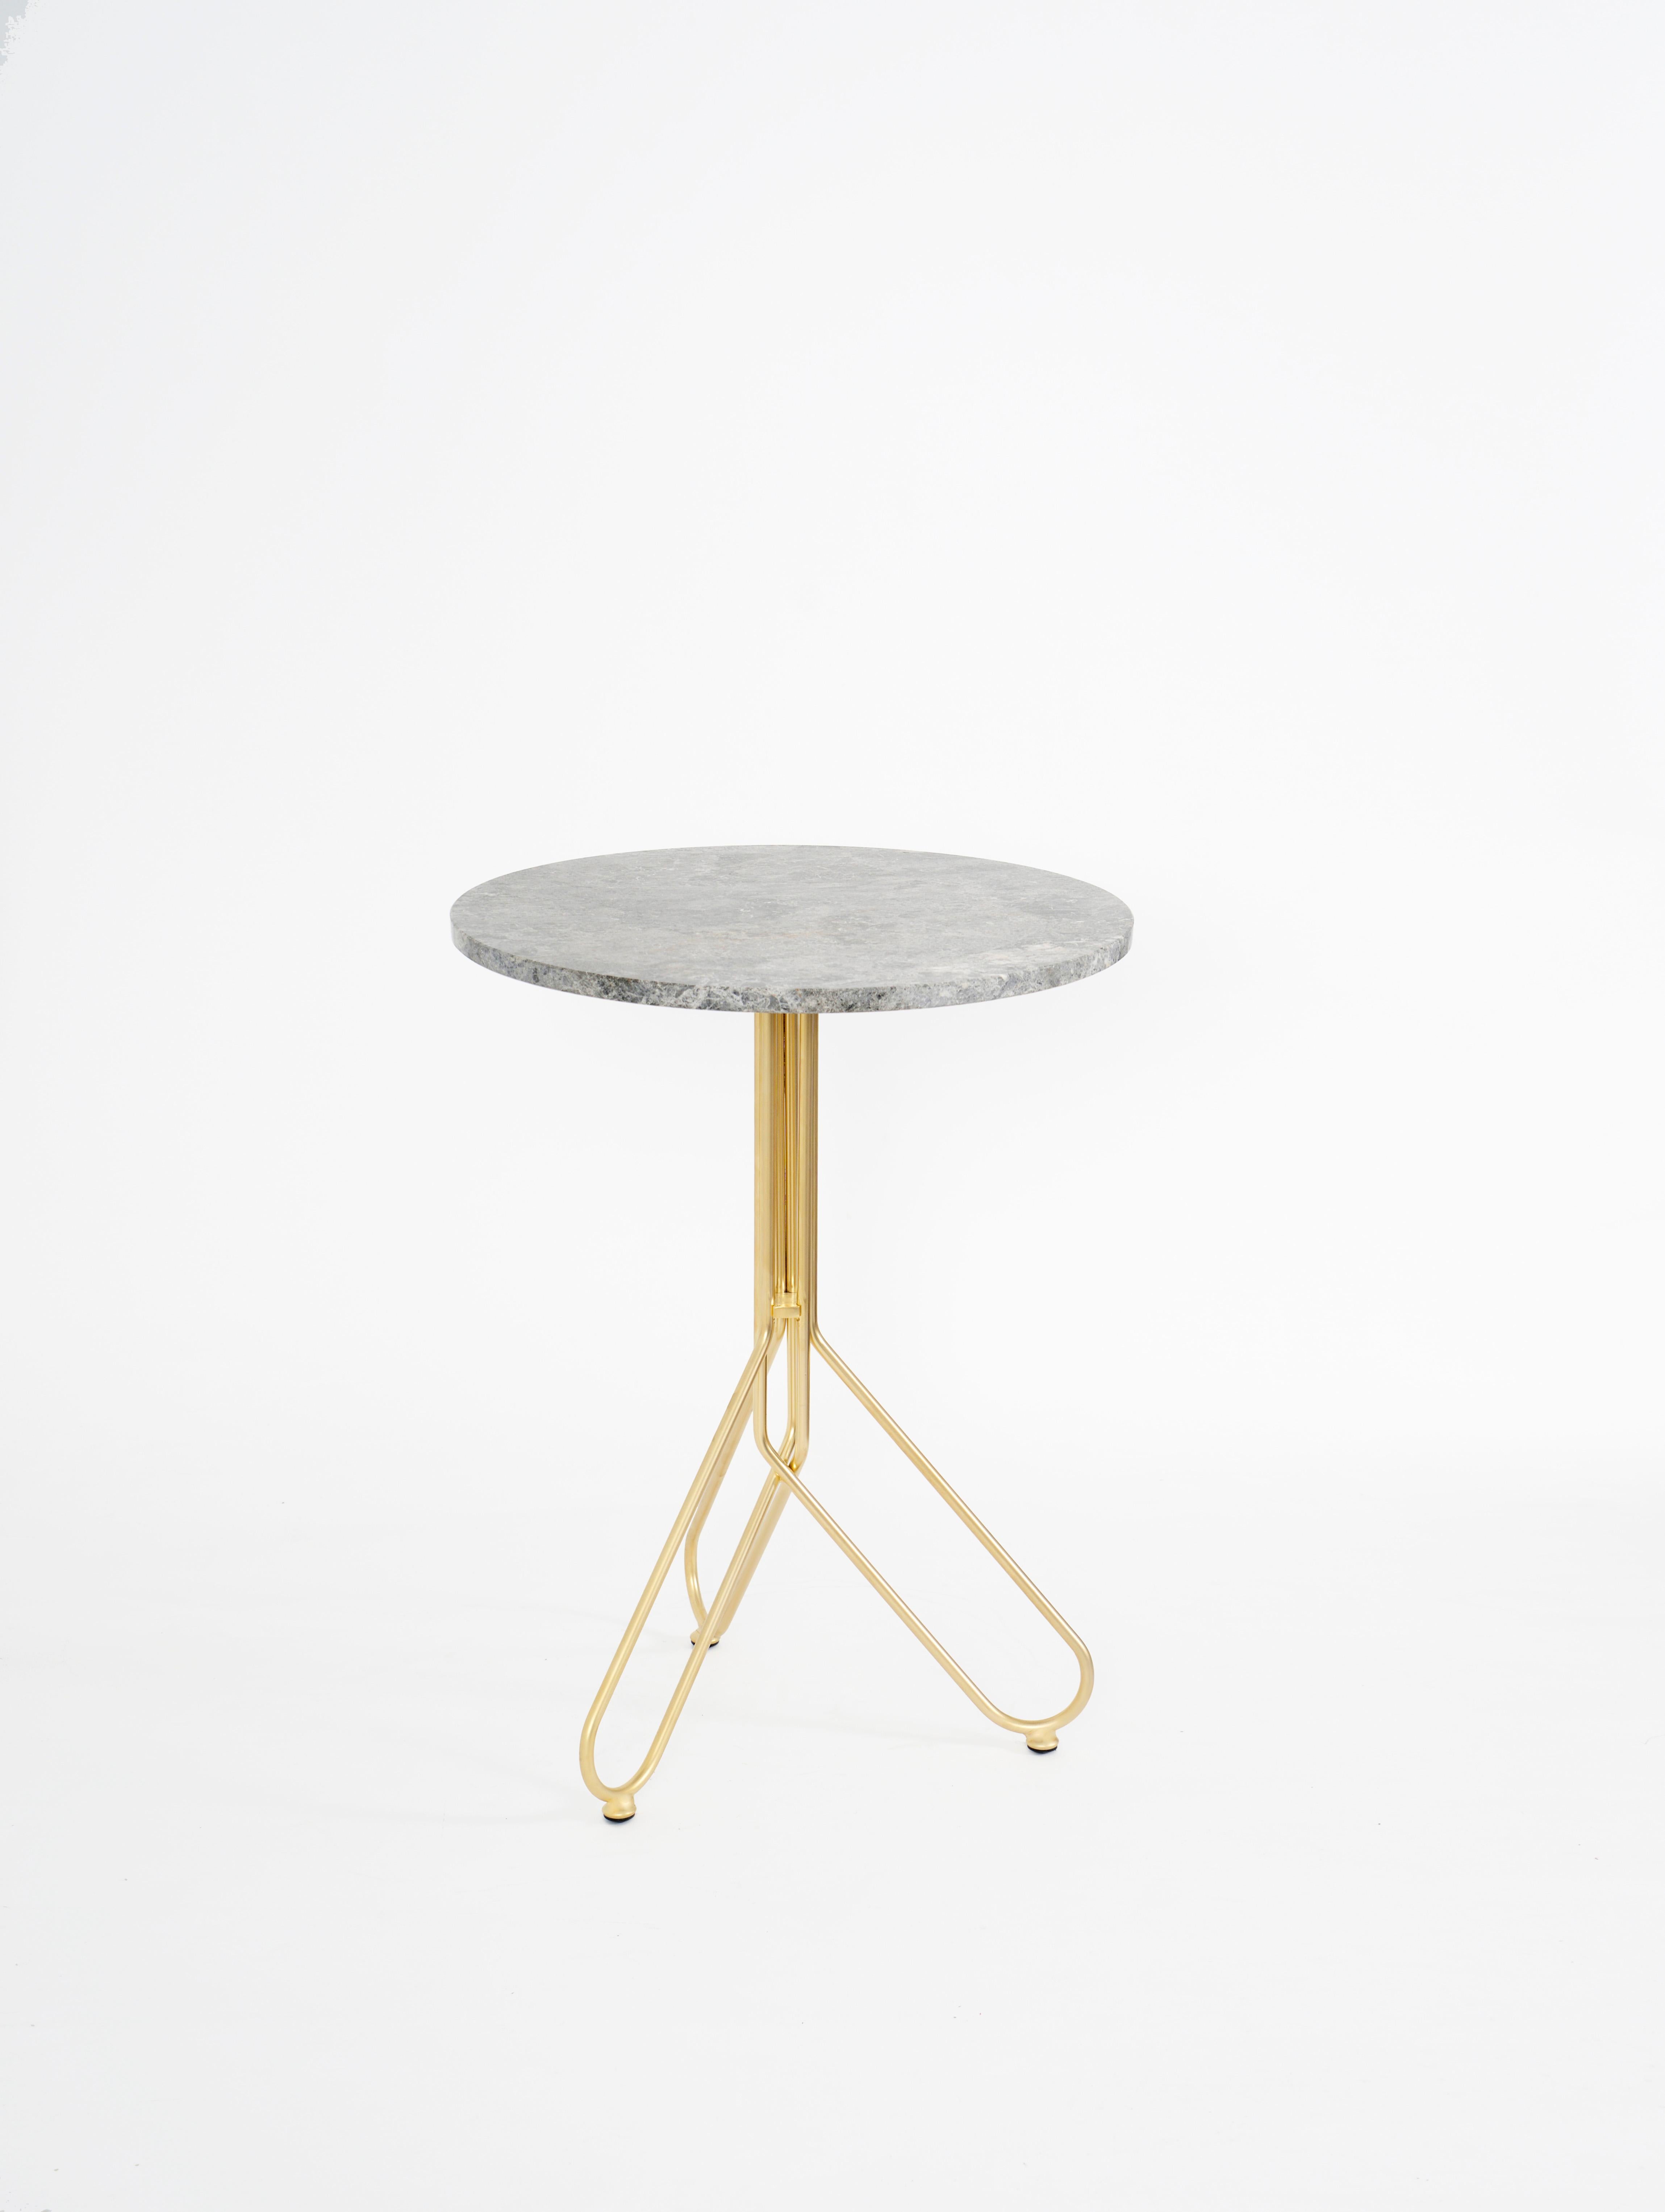 Italian Cota Marble Contemporary Gold Table design Enrico Girotti by lapiegaWD